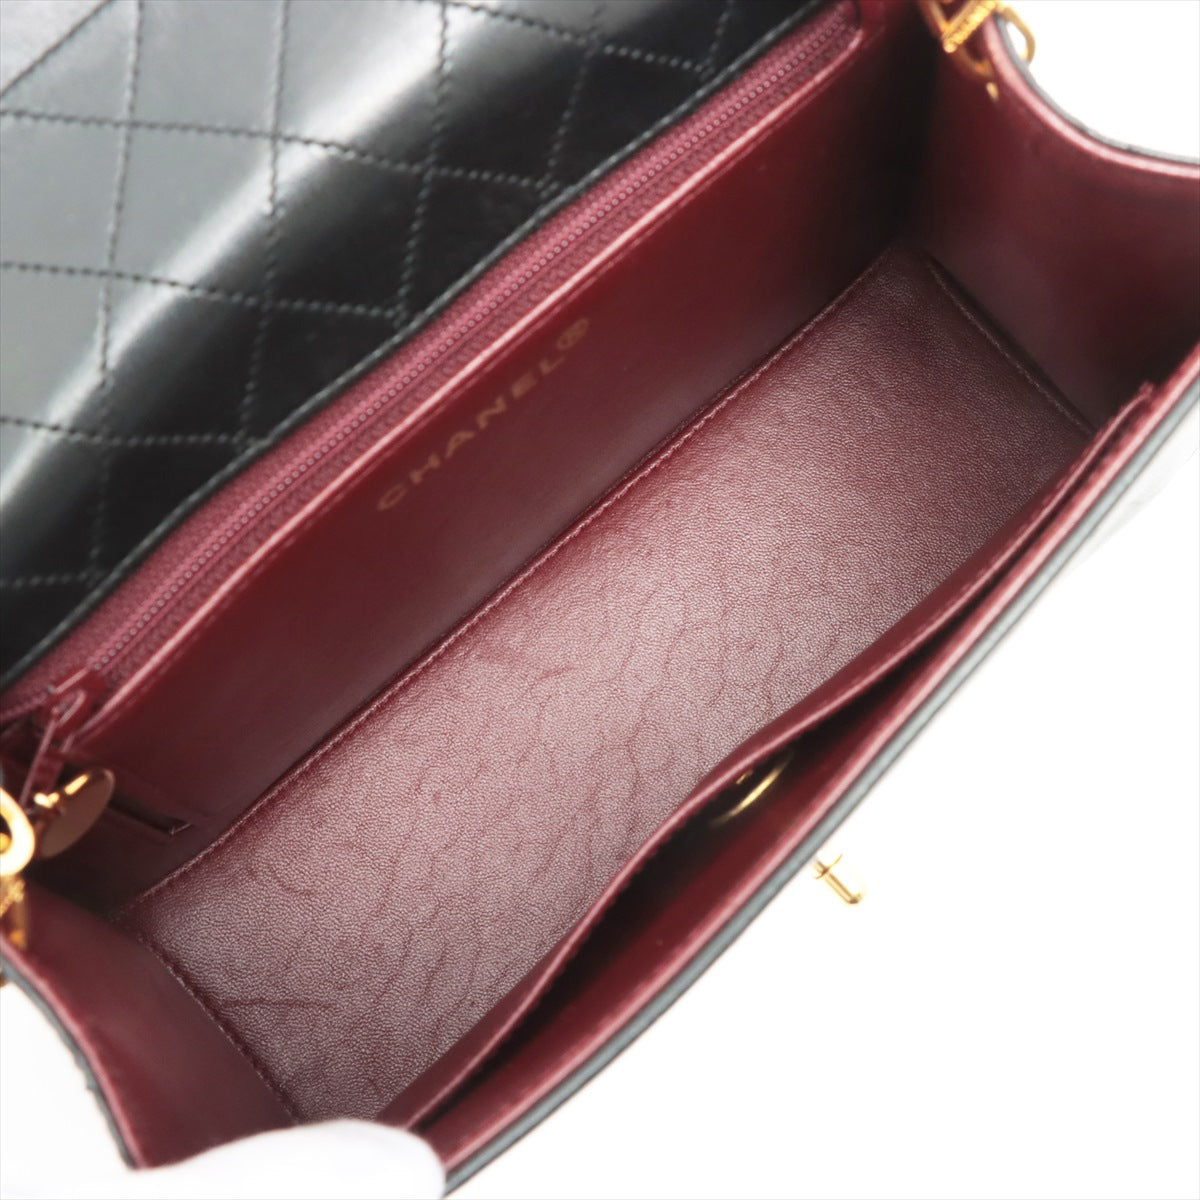 Chanel Matelasse Ram leather Single flap single chain bag Black Gold Metal fittings 1XXXXXX